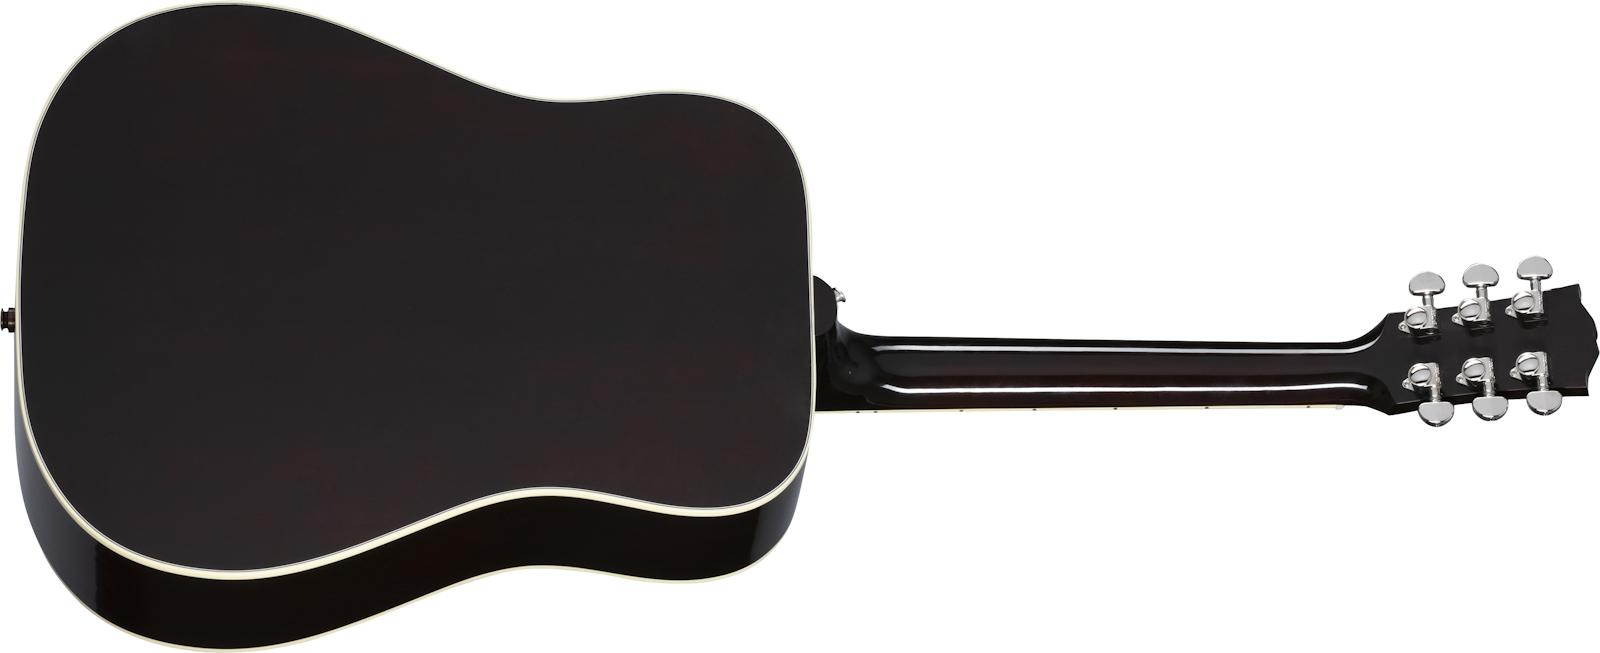 Gibson Hummingbird Standard Modern Dreadnought Epicea Acajou Rw - Vintage Sunburst - Electro acoustic guitar - Variation 1